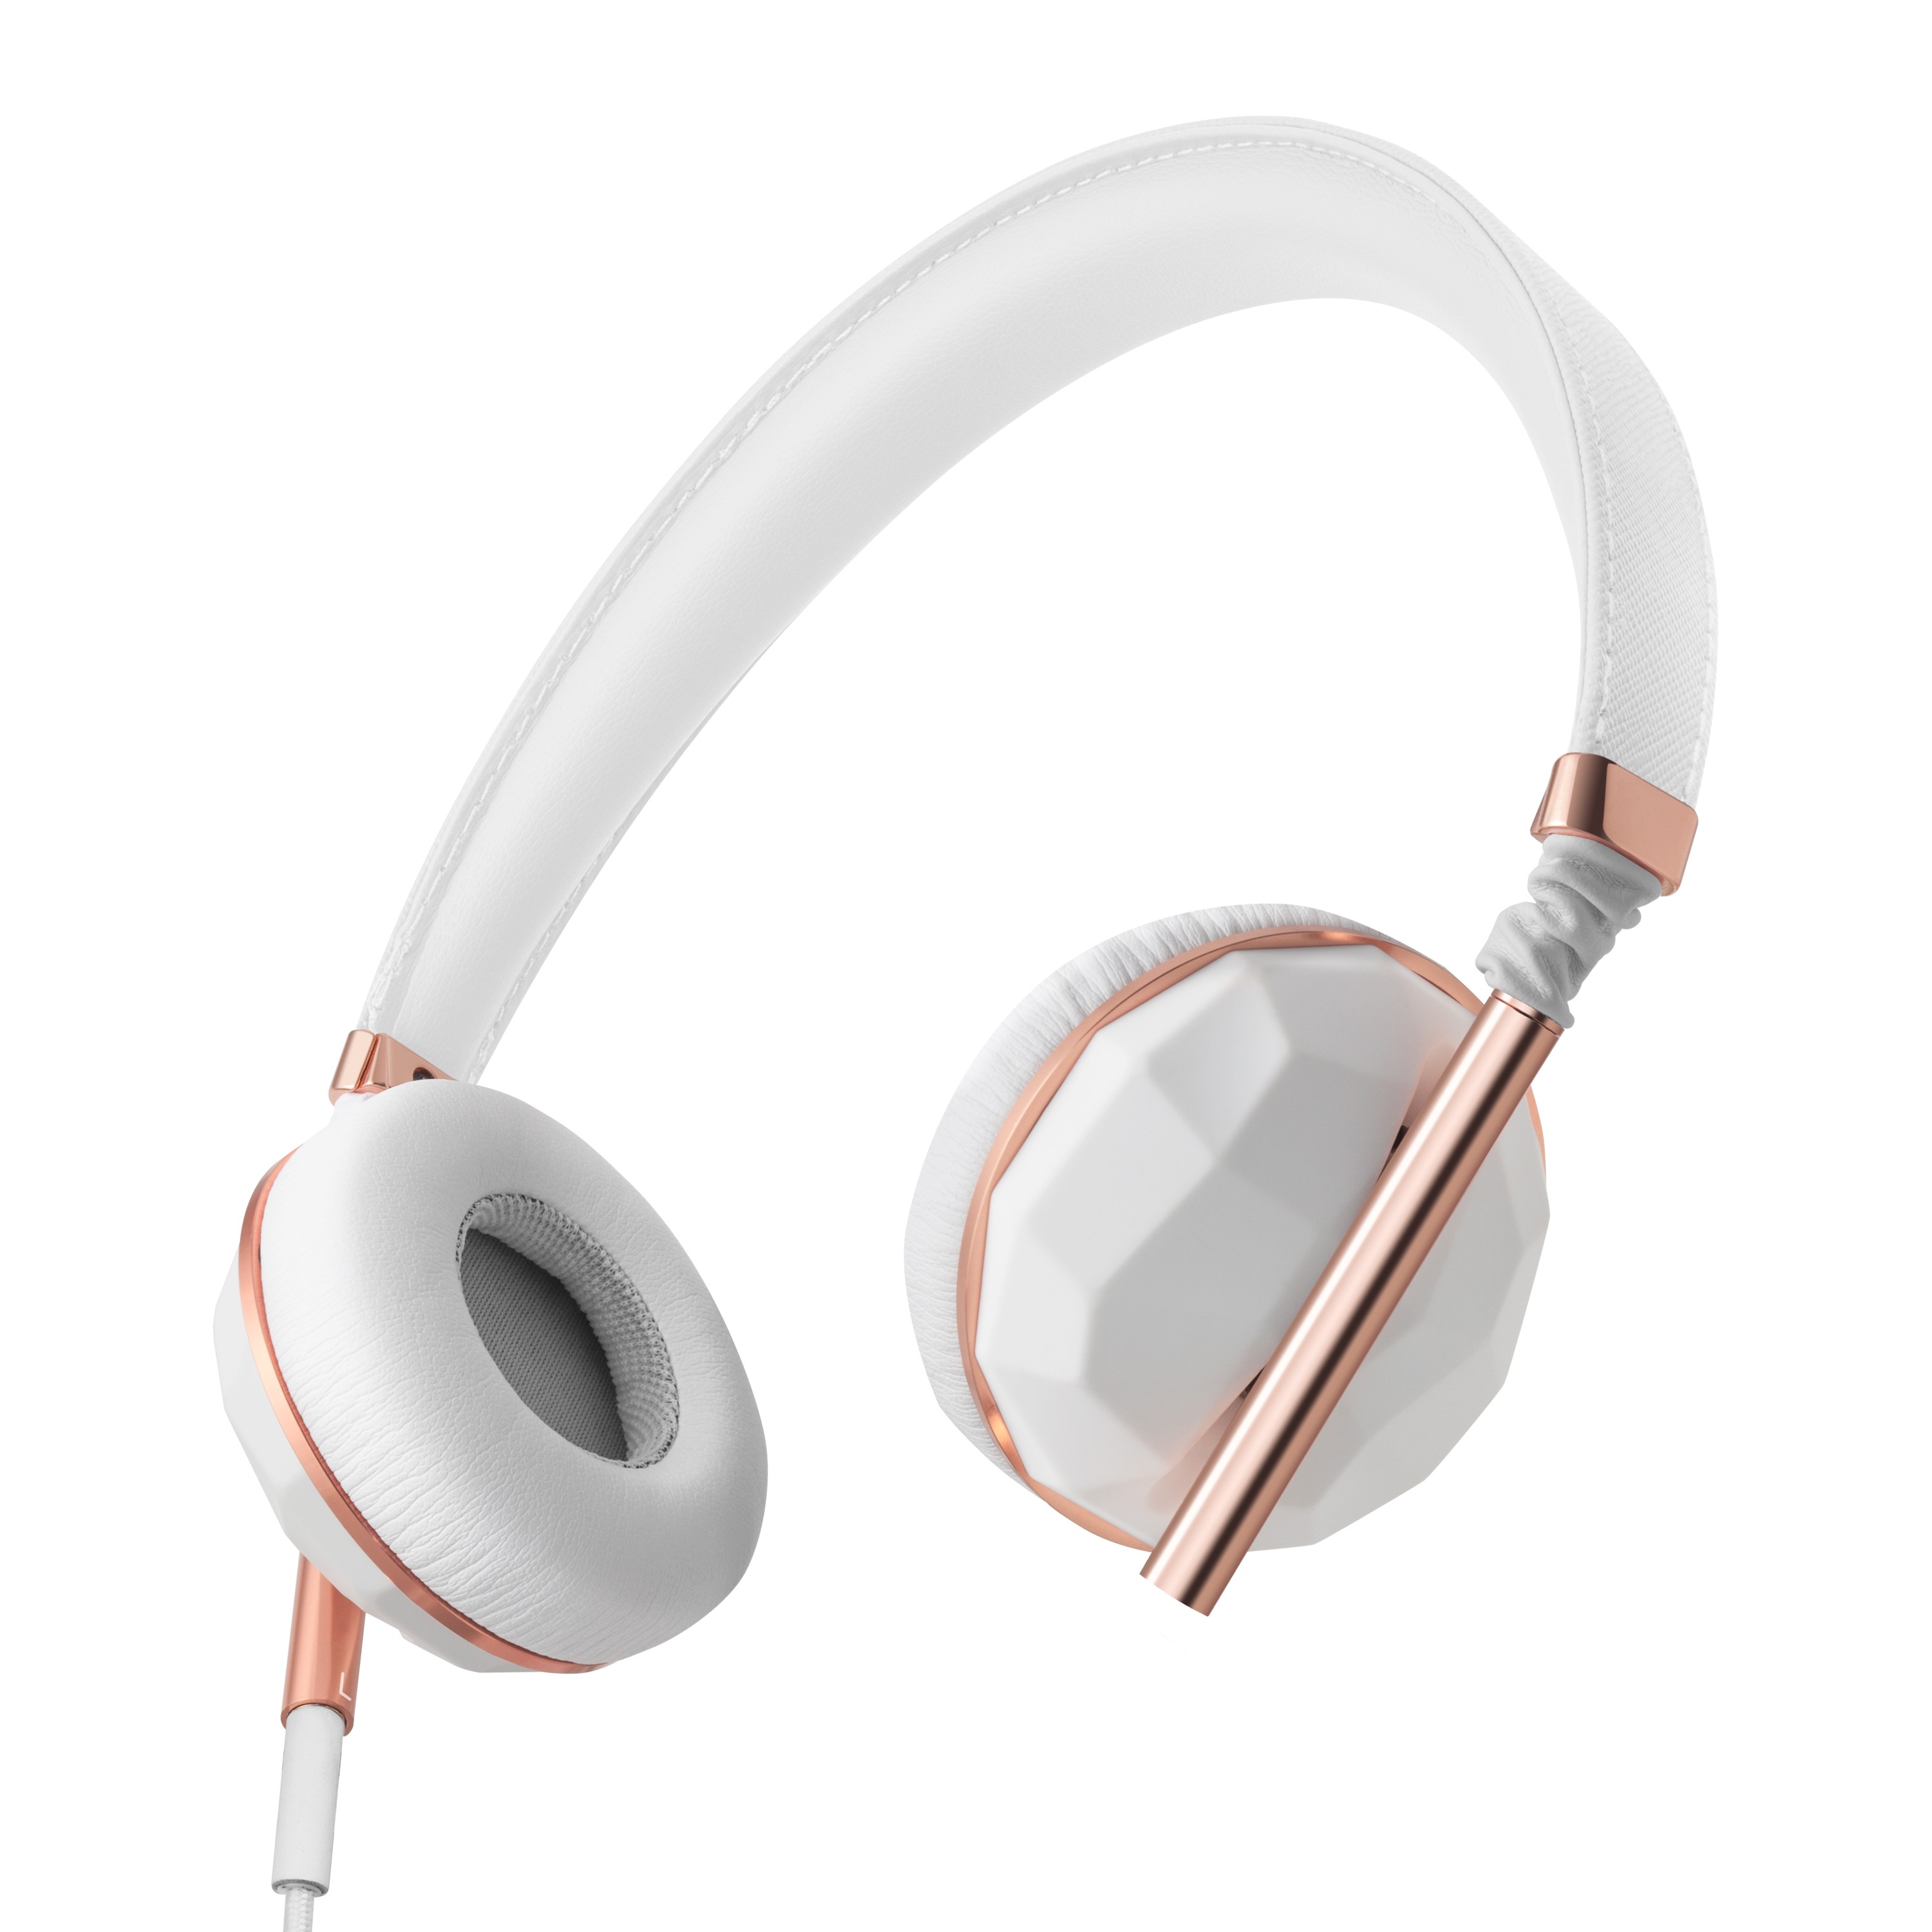 ... Ear Headphones in Faceted Ceramic and Rose Gold, 149.99, Caeden